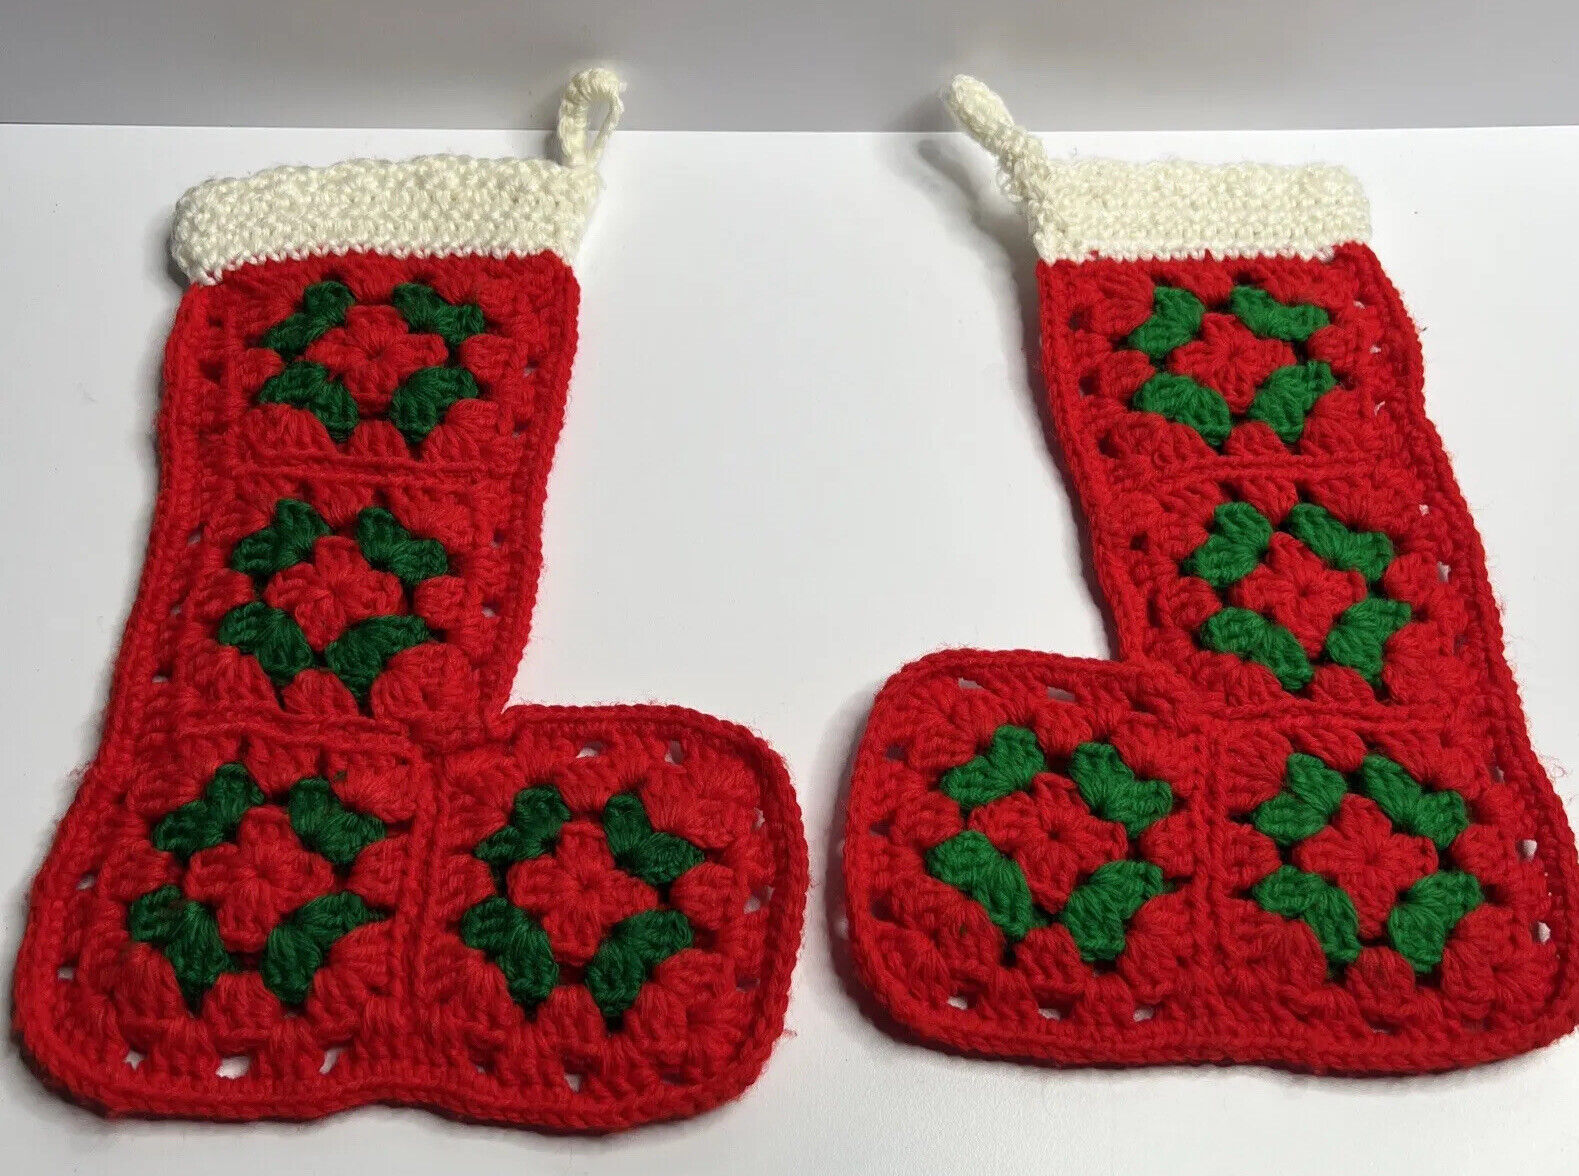 2 Vintage Handmade Granny Square Crochet Christmas Stockings Red w/Holly